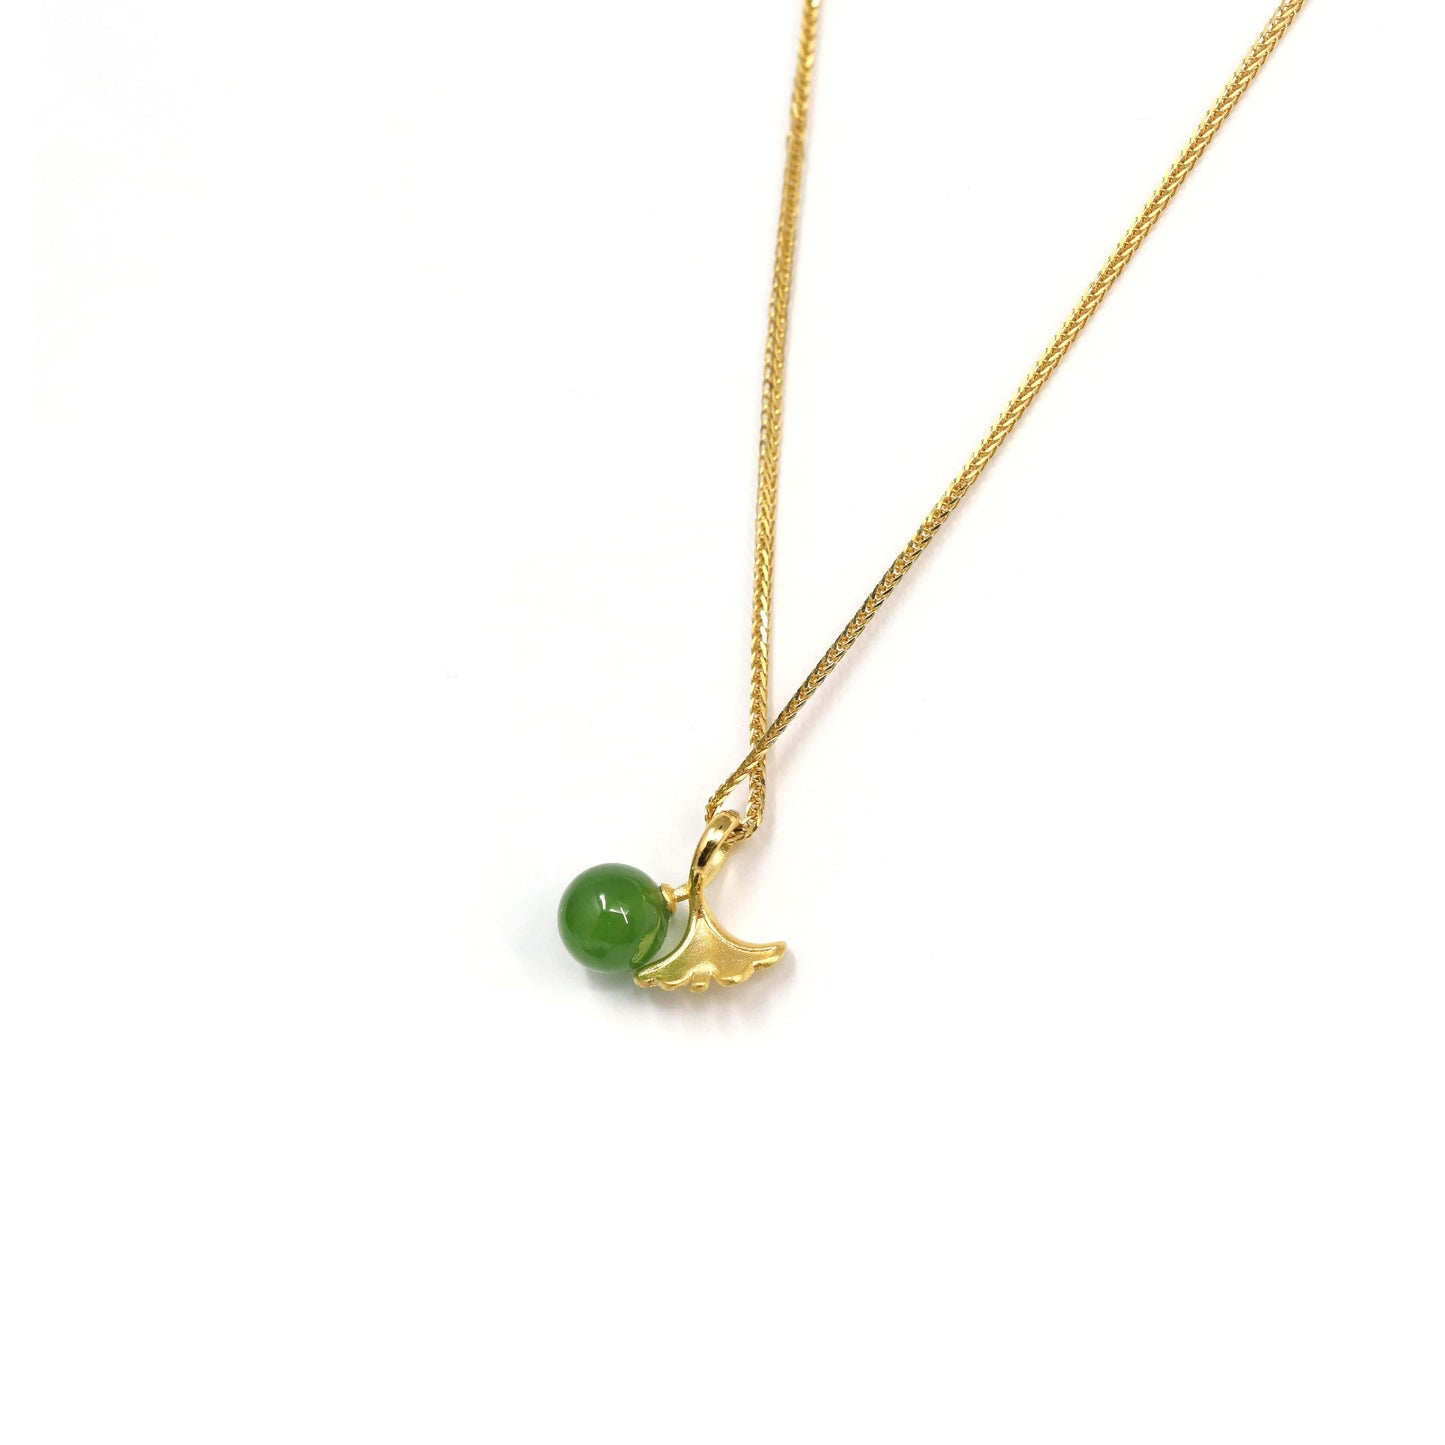 RealJade Natural Jadeite, Nephrite Jade Jewelry. Authentic, Grade-A Jade